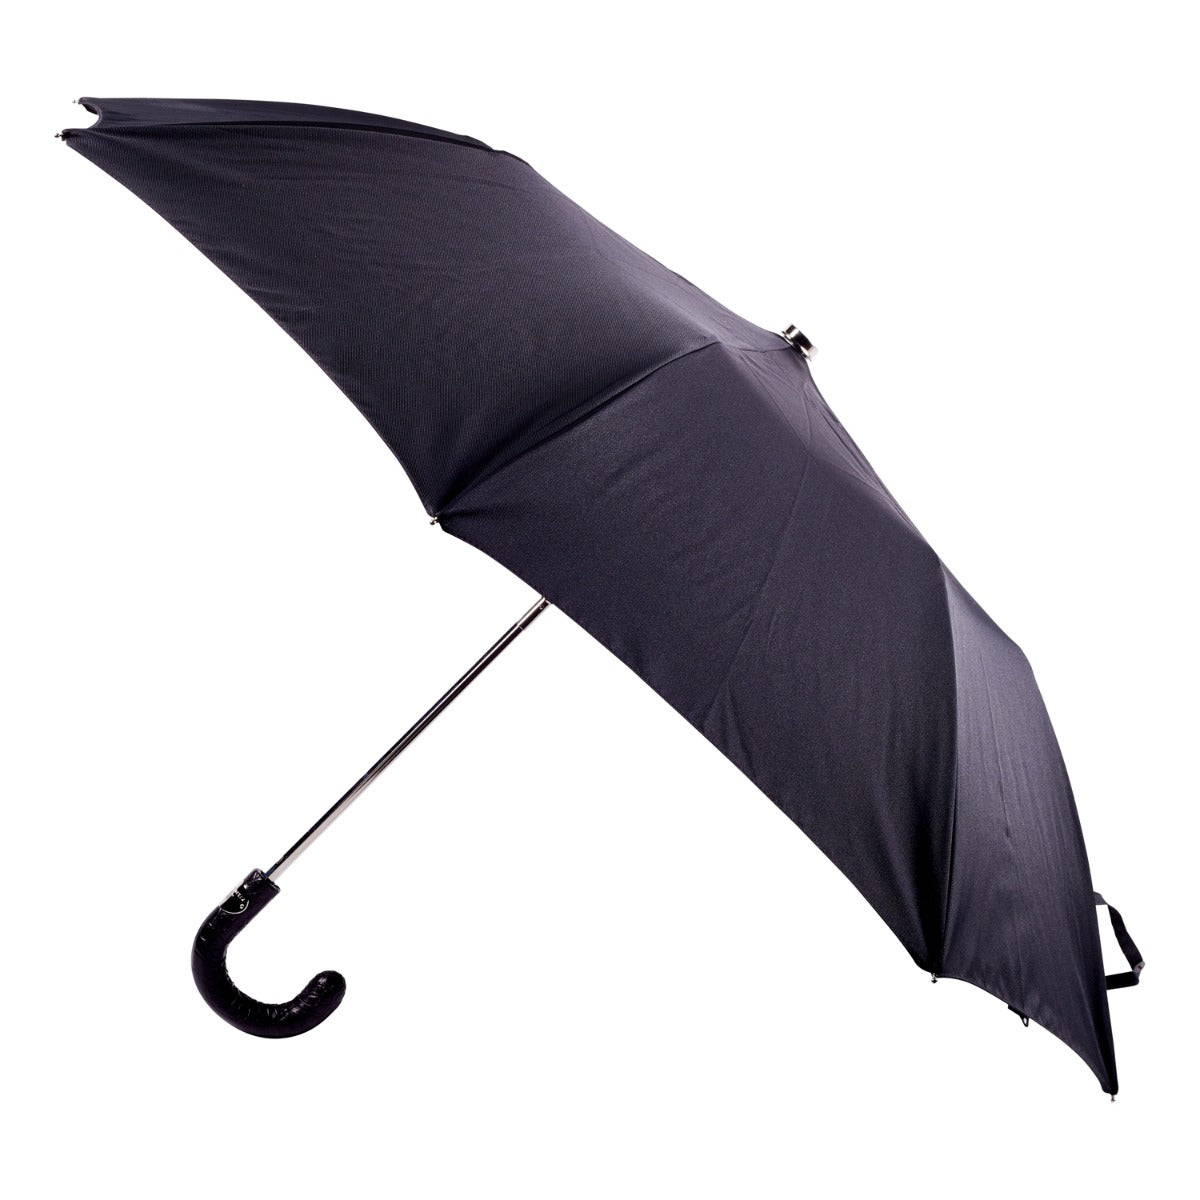 A handmade Black Alligator Travel Umbrella with Black Canopy from Italy by KirbyAllison.com.